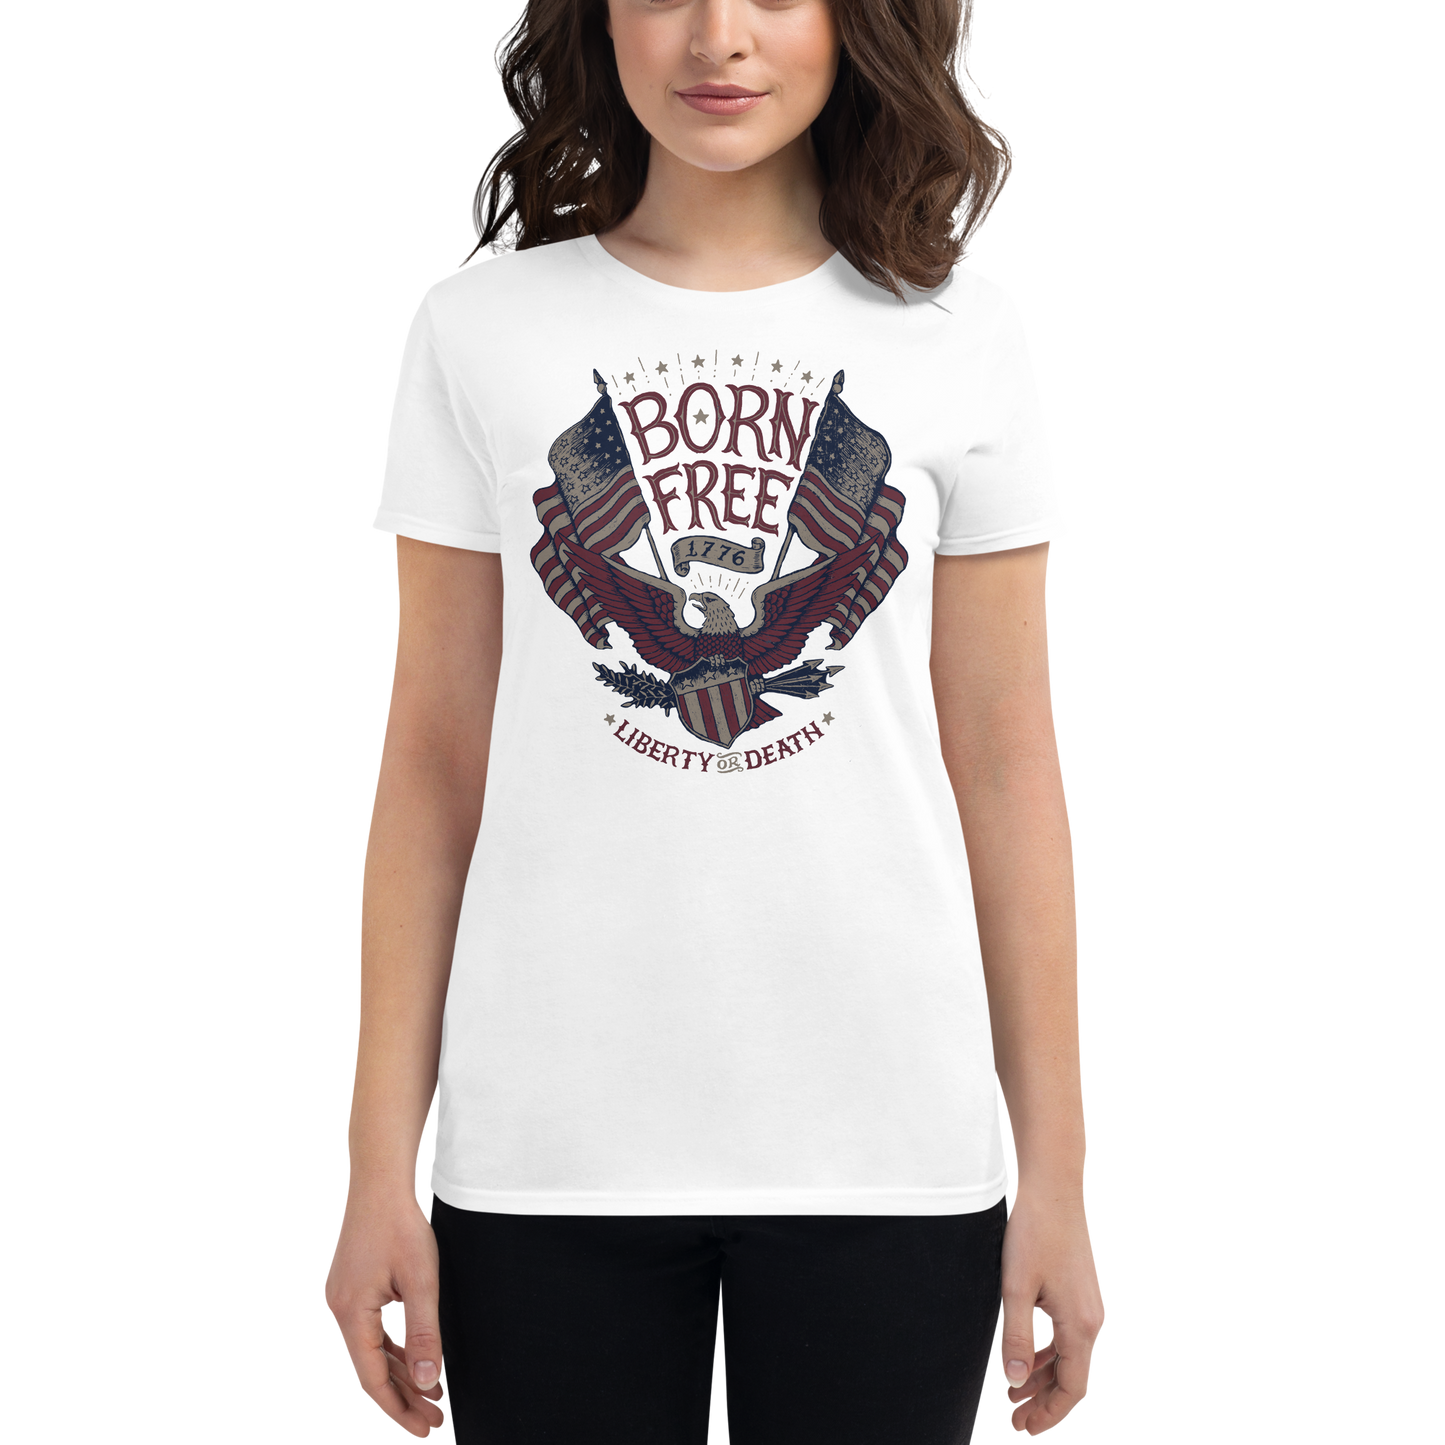 Born Free Women's Shirt